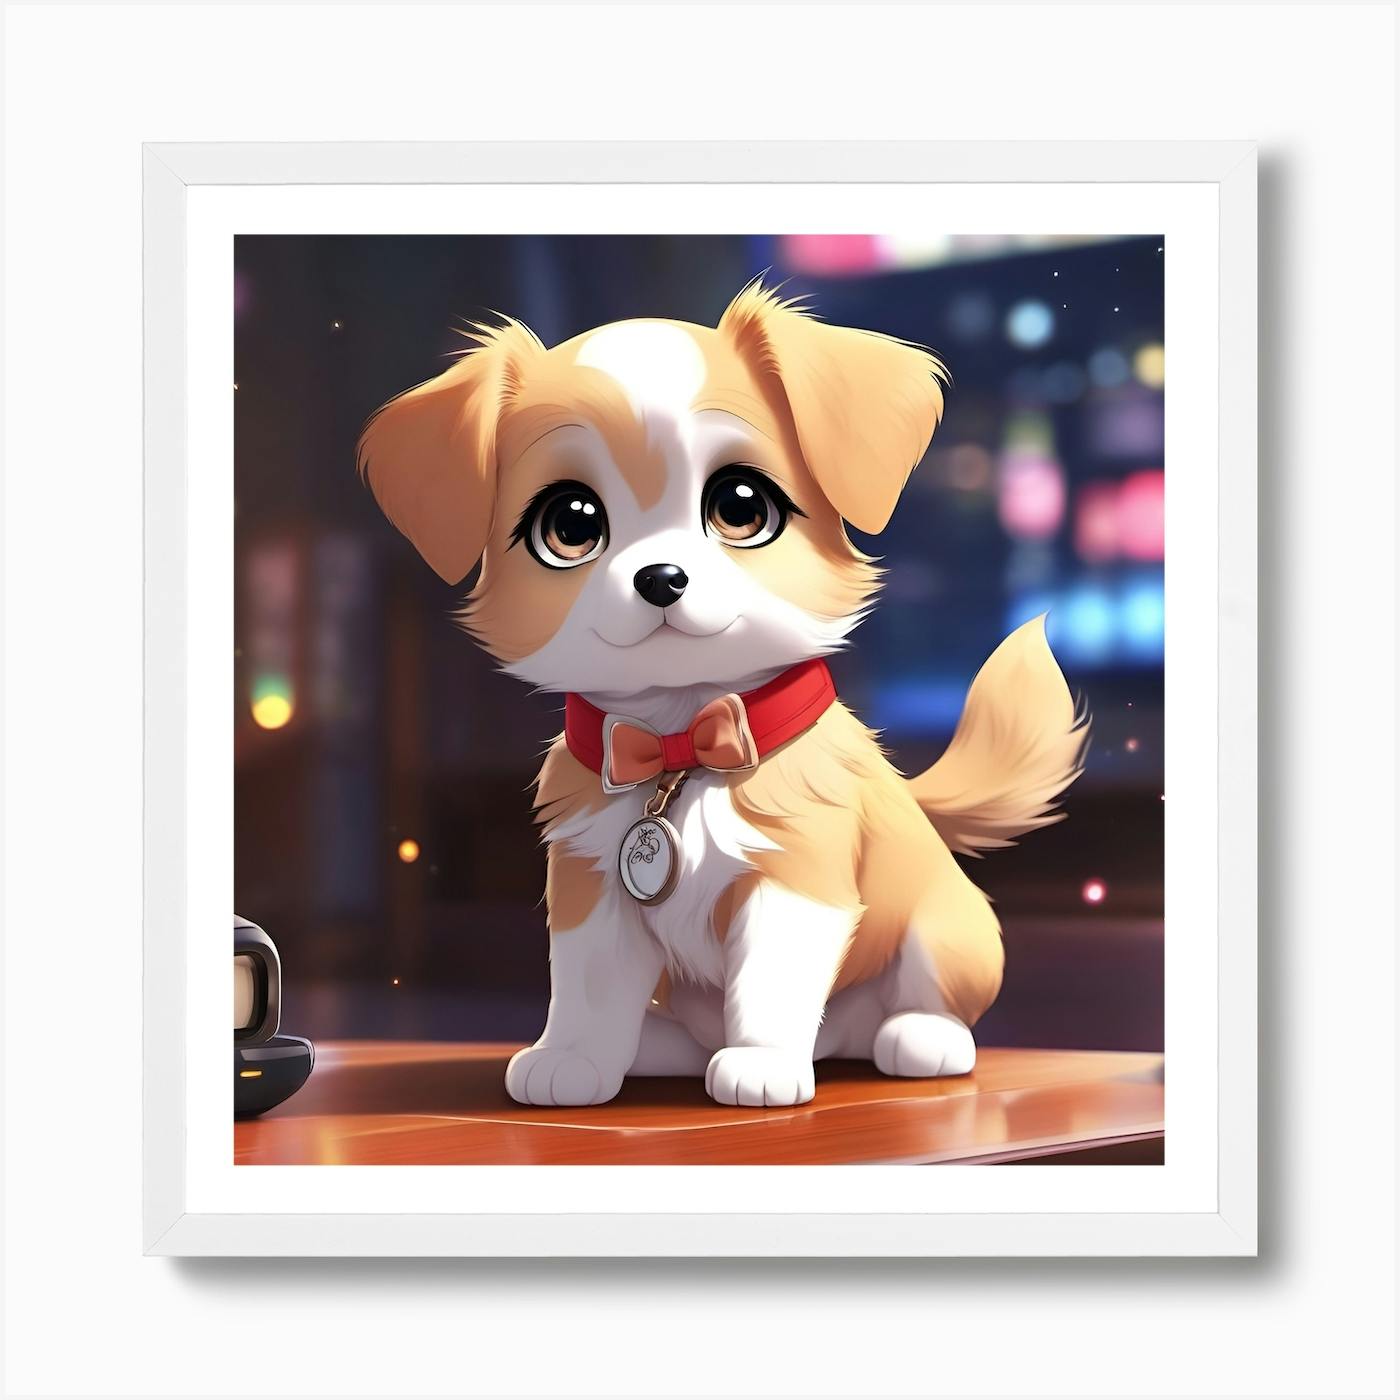 Tonghua Meng gong chang french bulldog plush anime kawaii dog stuffed  animal | eBay